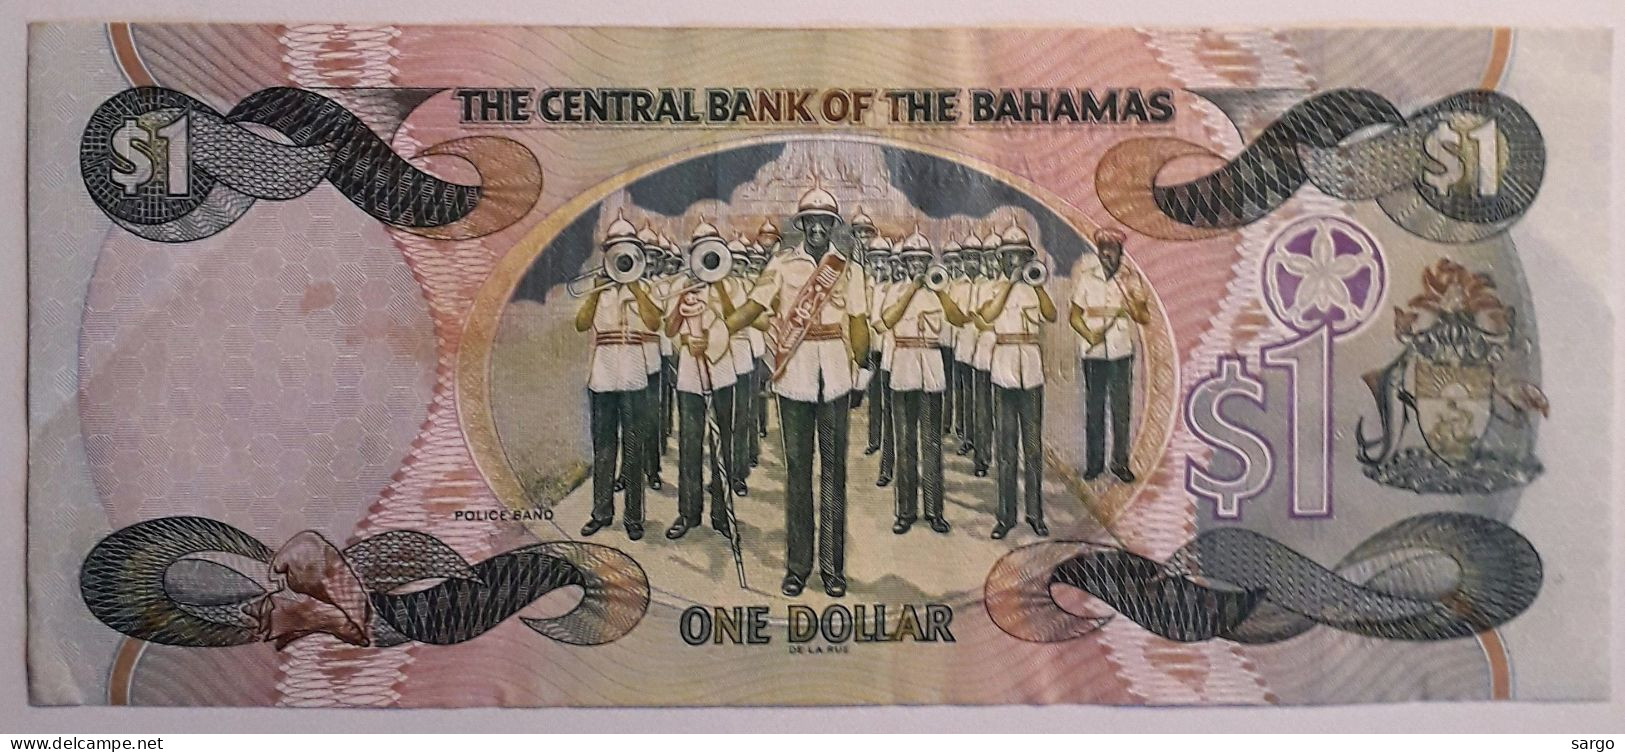 BAHAMAS - 1 DOLLAR - 2001- UNC - P 69 - BANKNOTES - PAPER MONEY - CARTAMONETA - - Bahamas